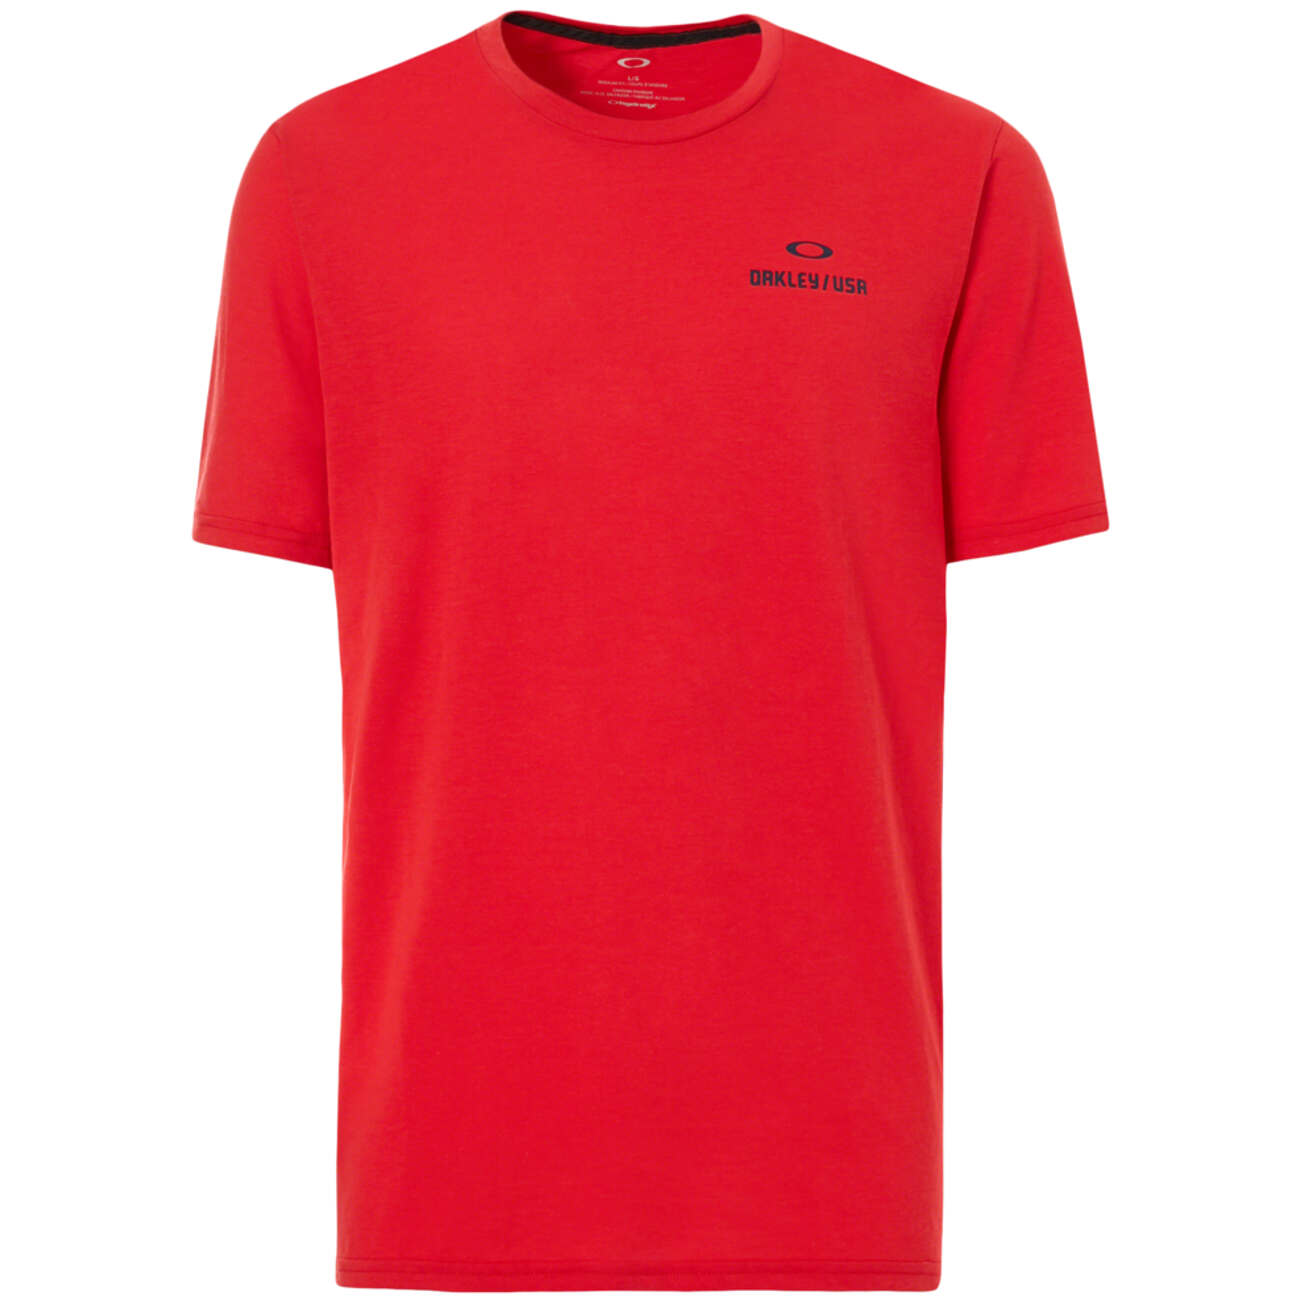 Oakley T-Shirt USA Flag Red Line